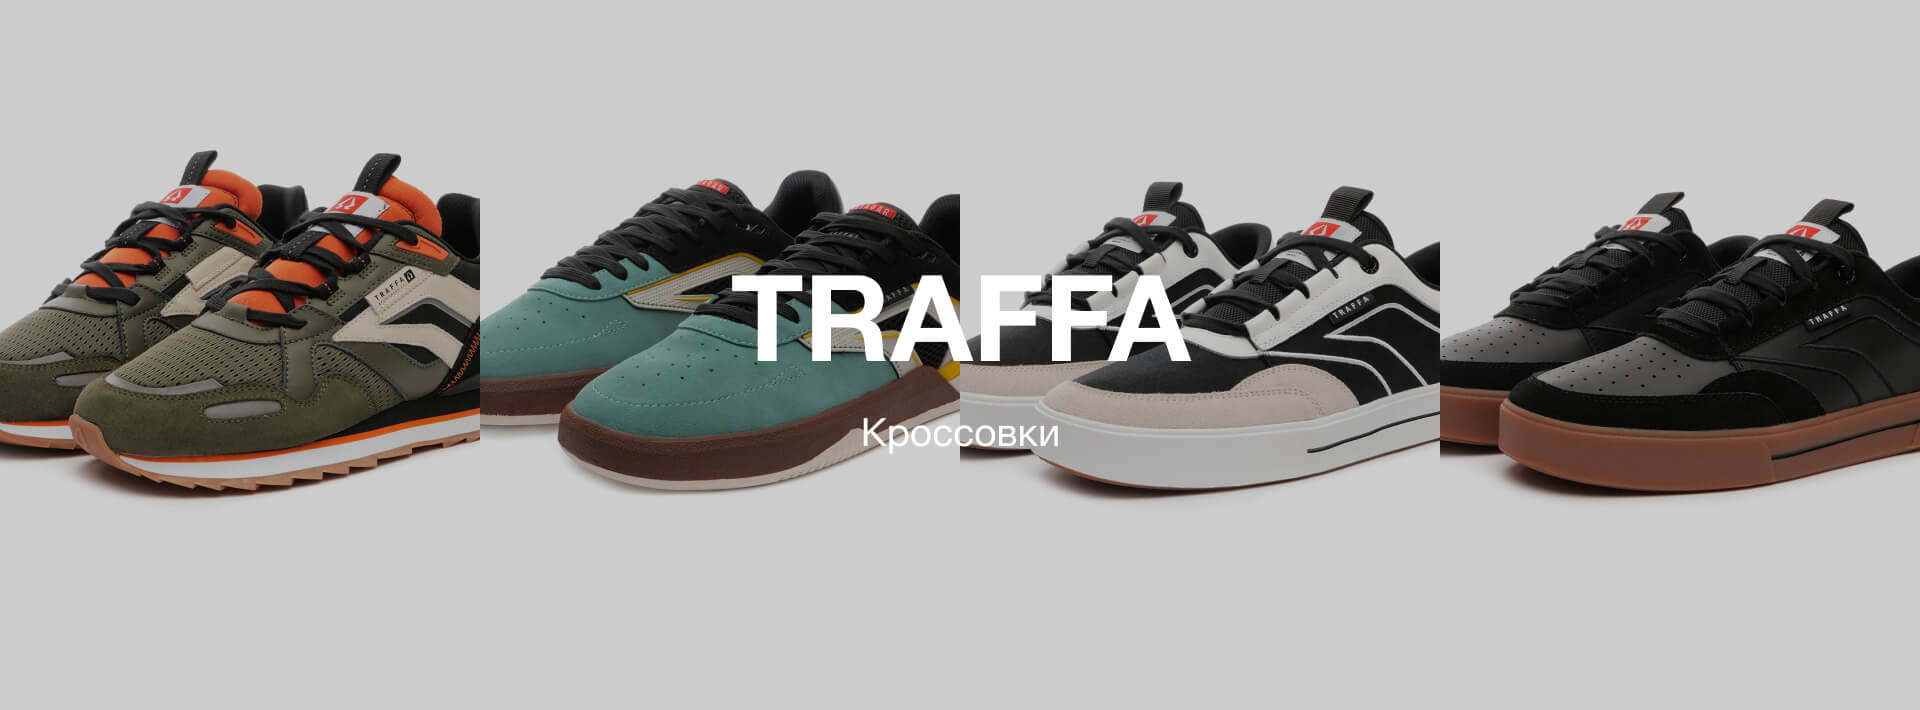 Новинка: Коллекция кроссовок от бренда TRAFFA